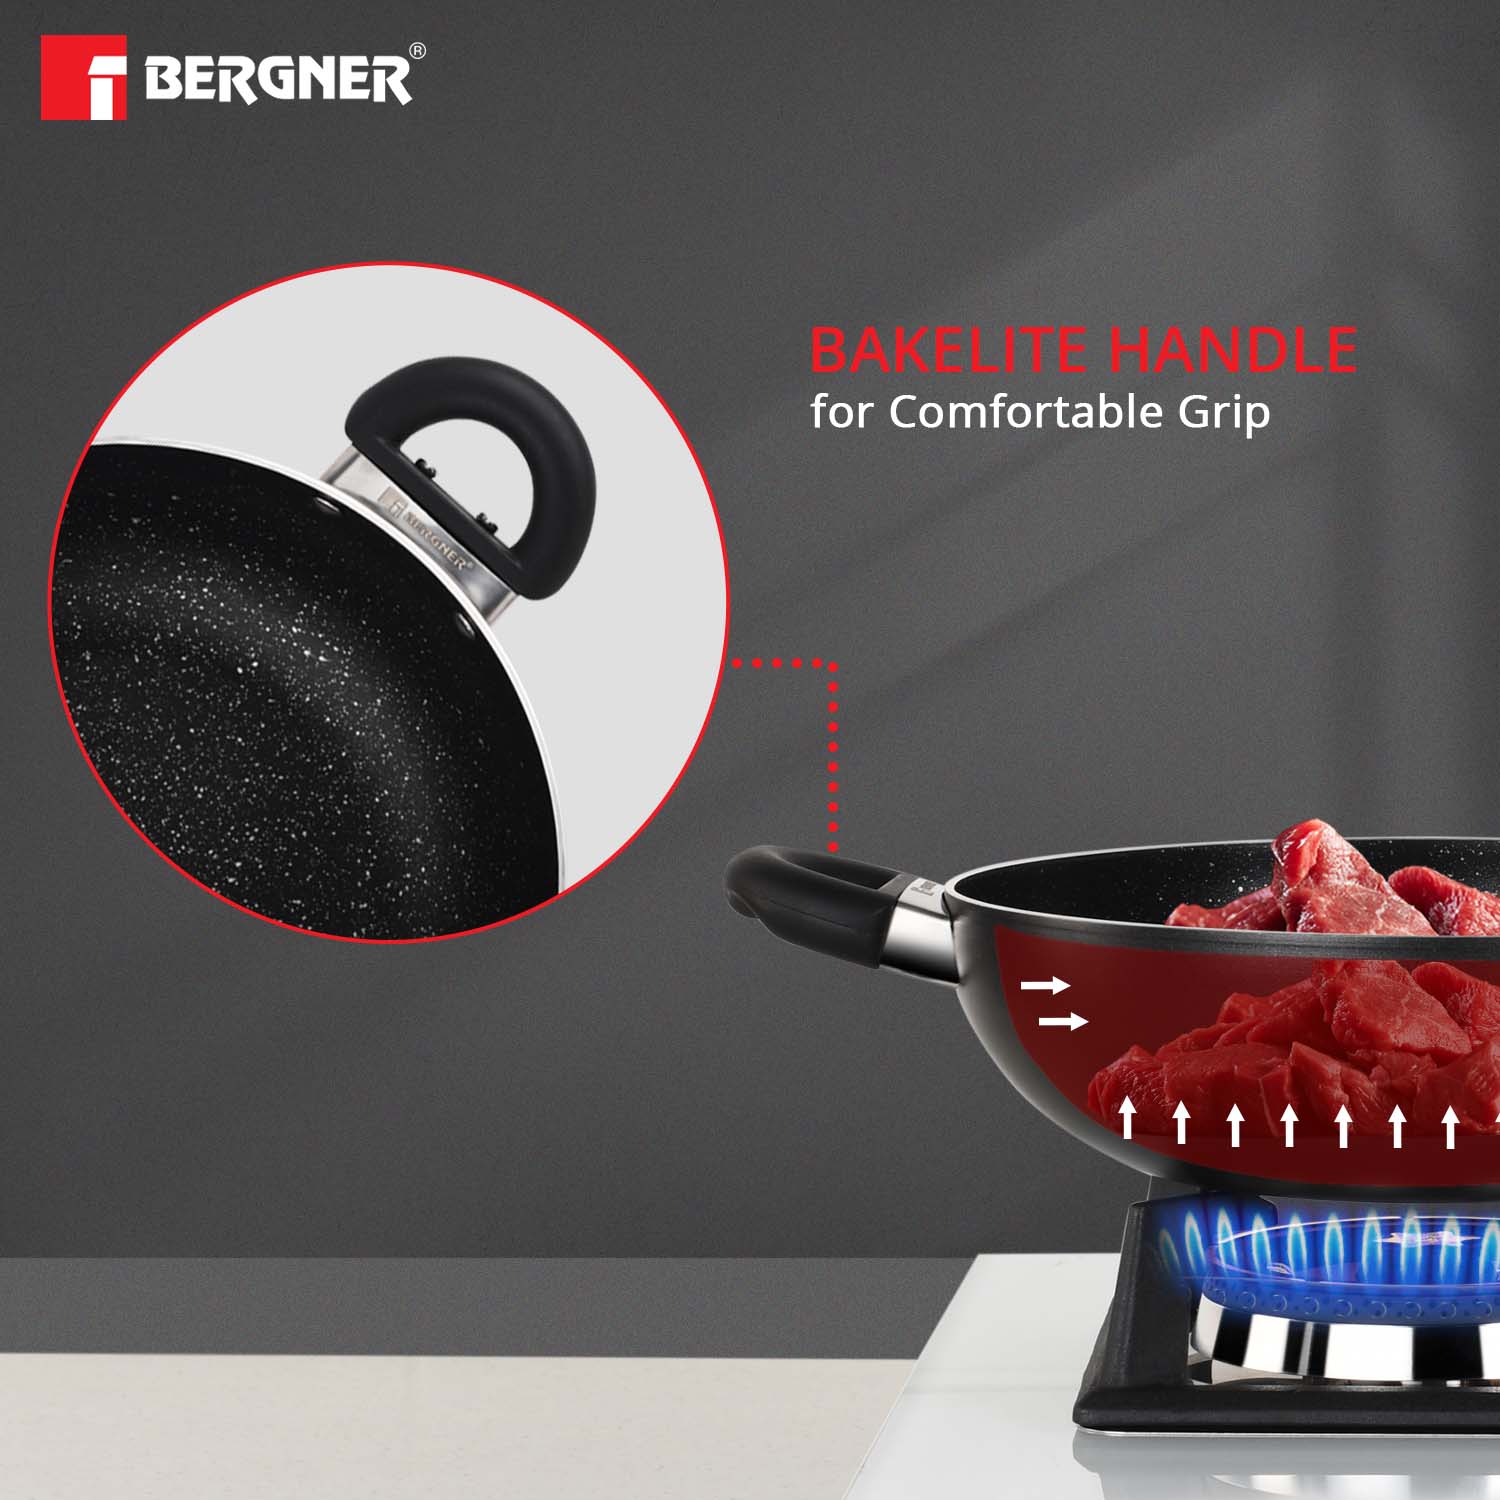 Bergner Essential Plus Non-stick Black - 26cm Kadhai with Glass Lid